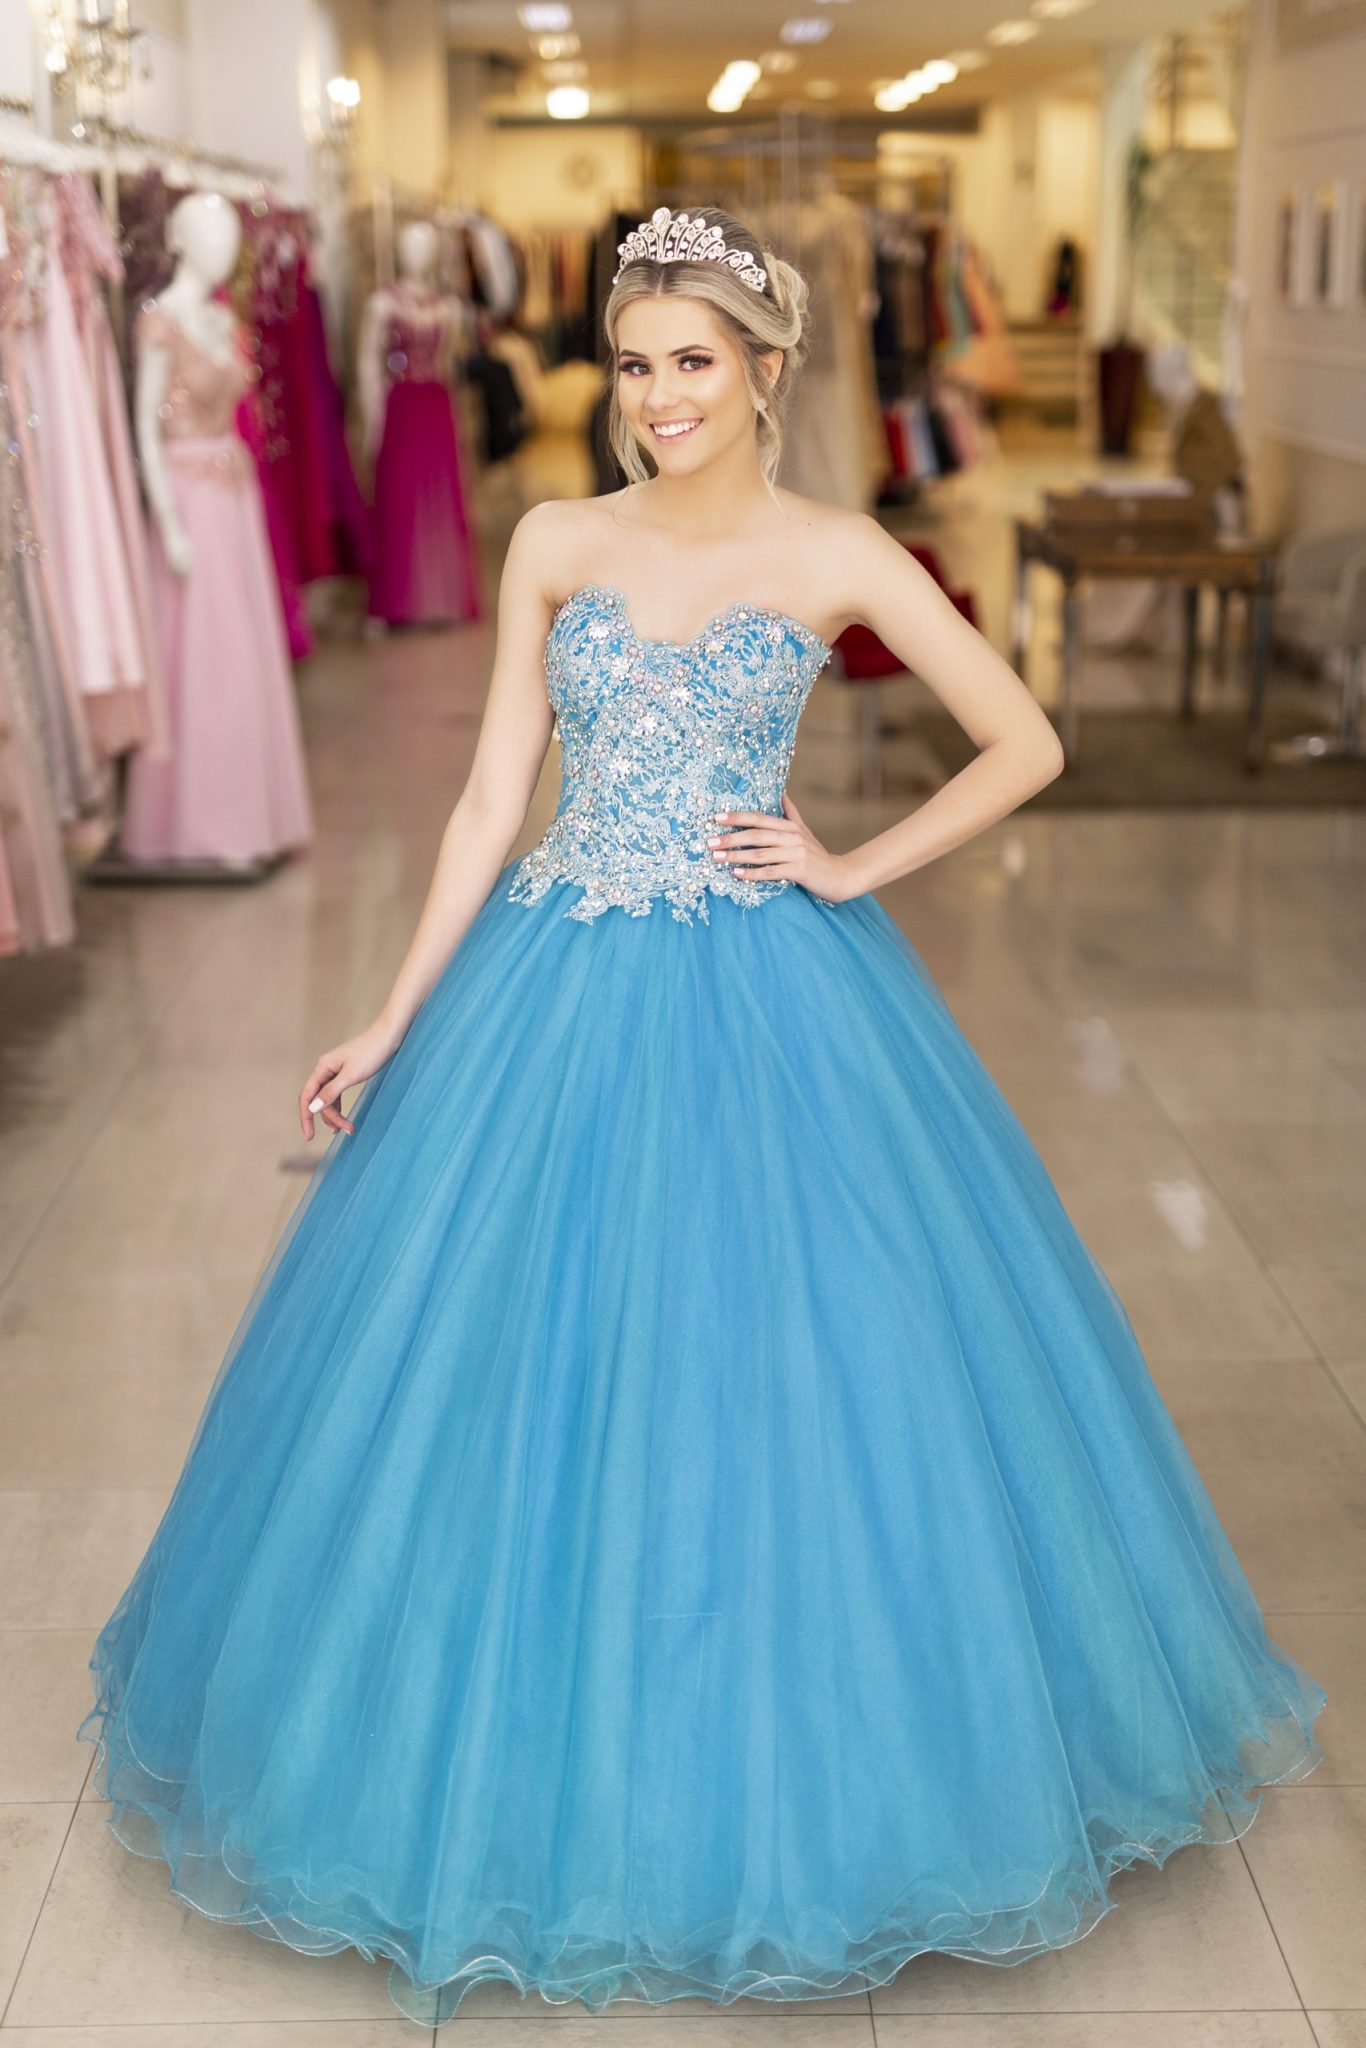 Vestido De Debutante Princesa Azul Tiffany Com Renda Bordada Maximus Atelier 2500